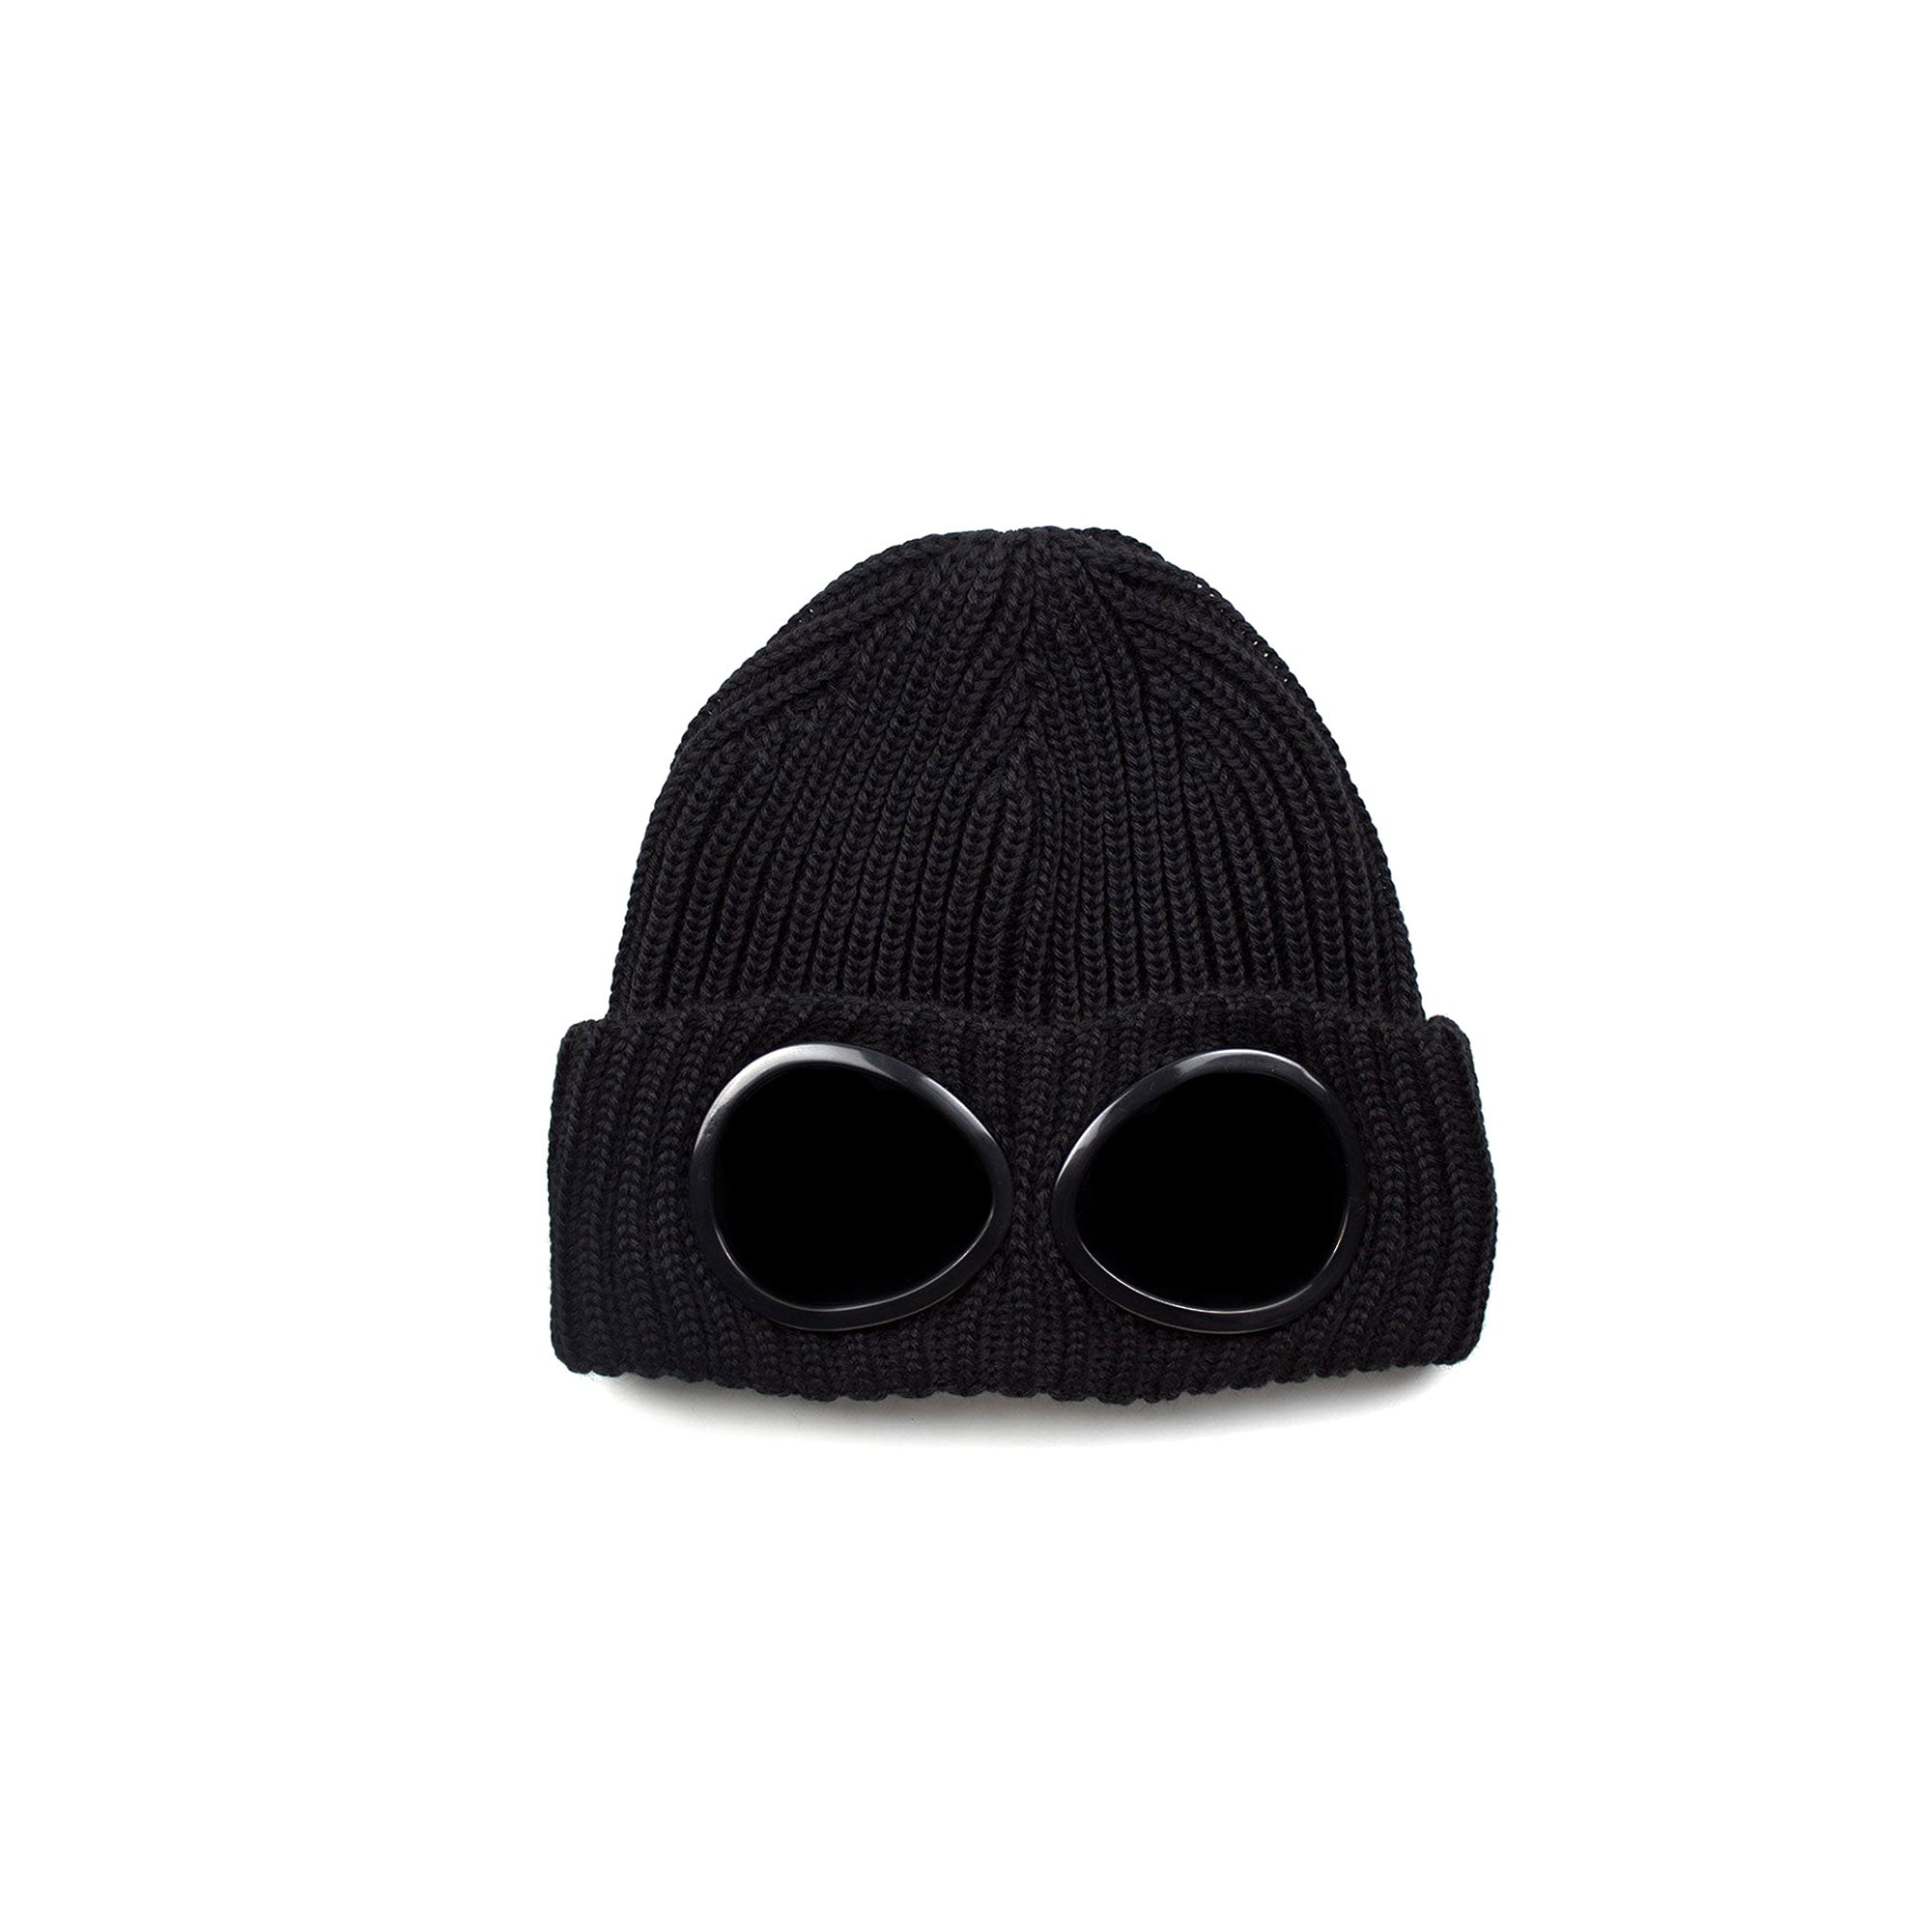 Cp company - Hats & Caps, Winter hats